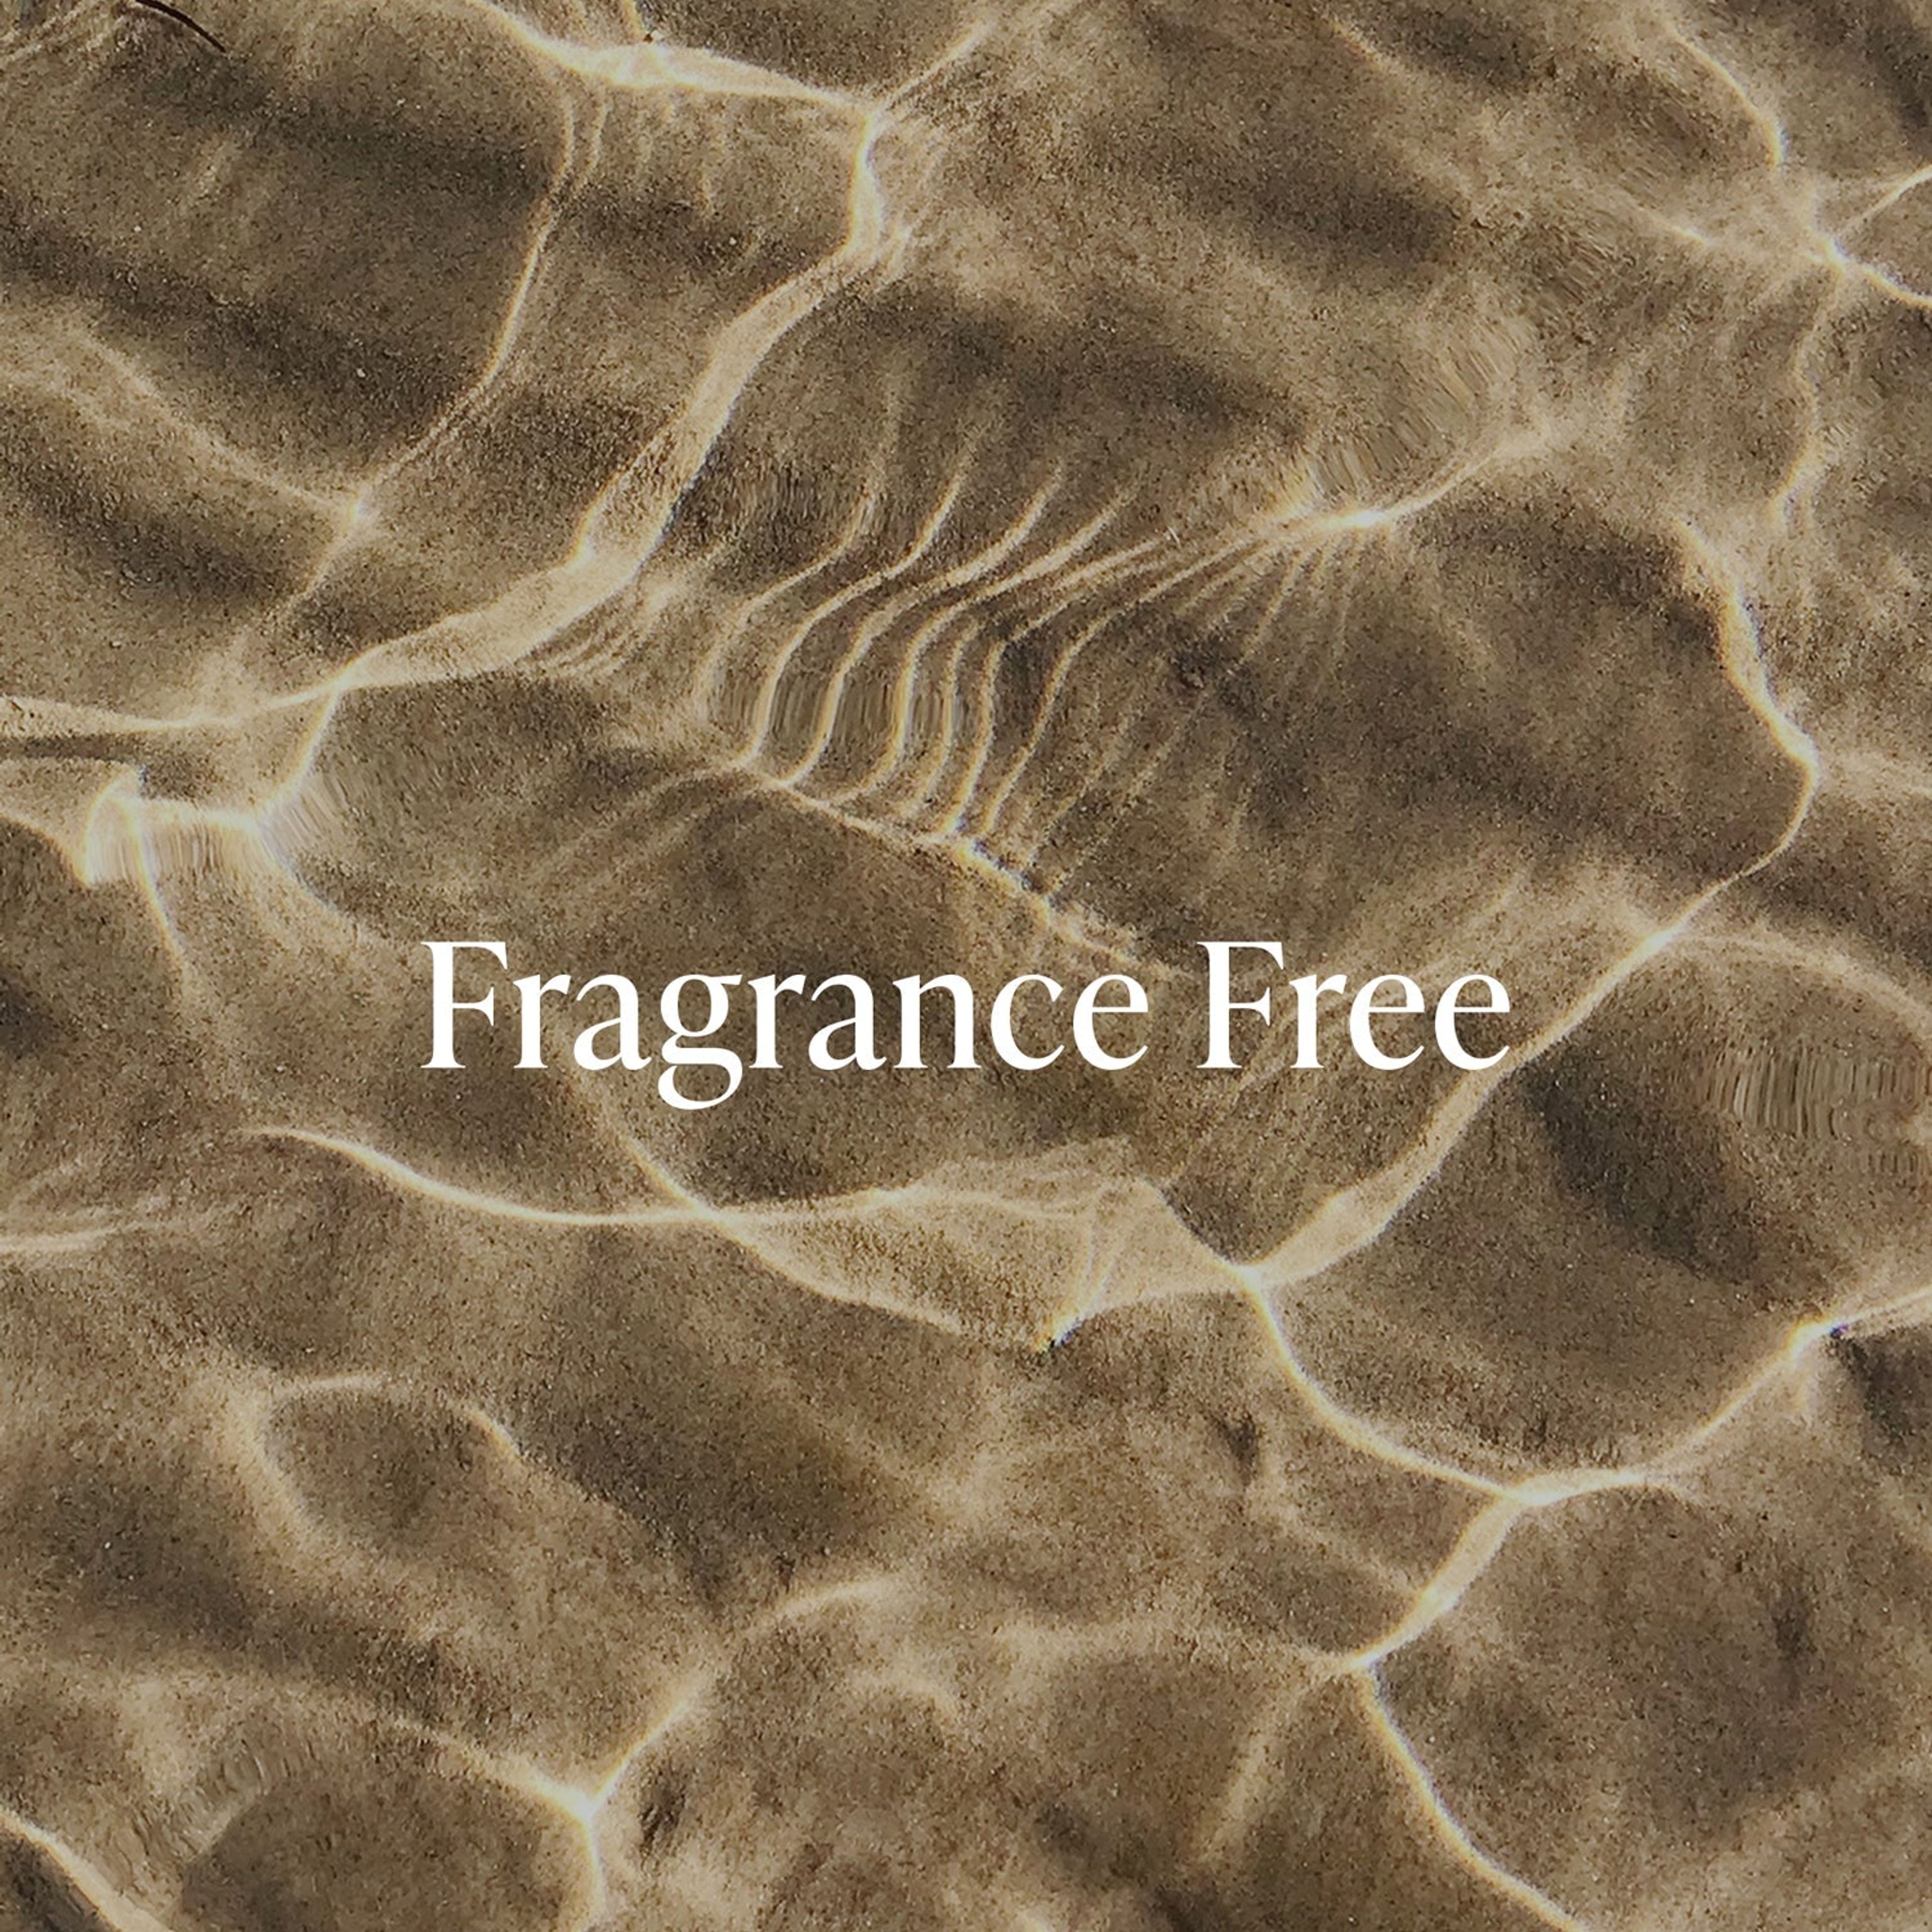 Fragrance Free - Skincare Deodorant